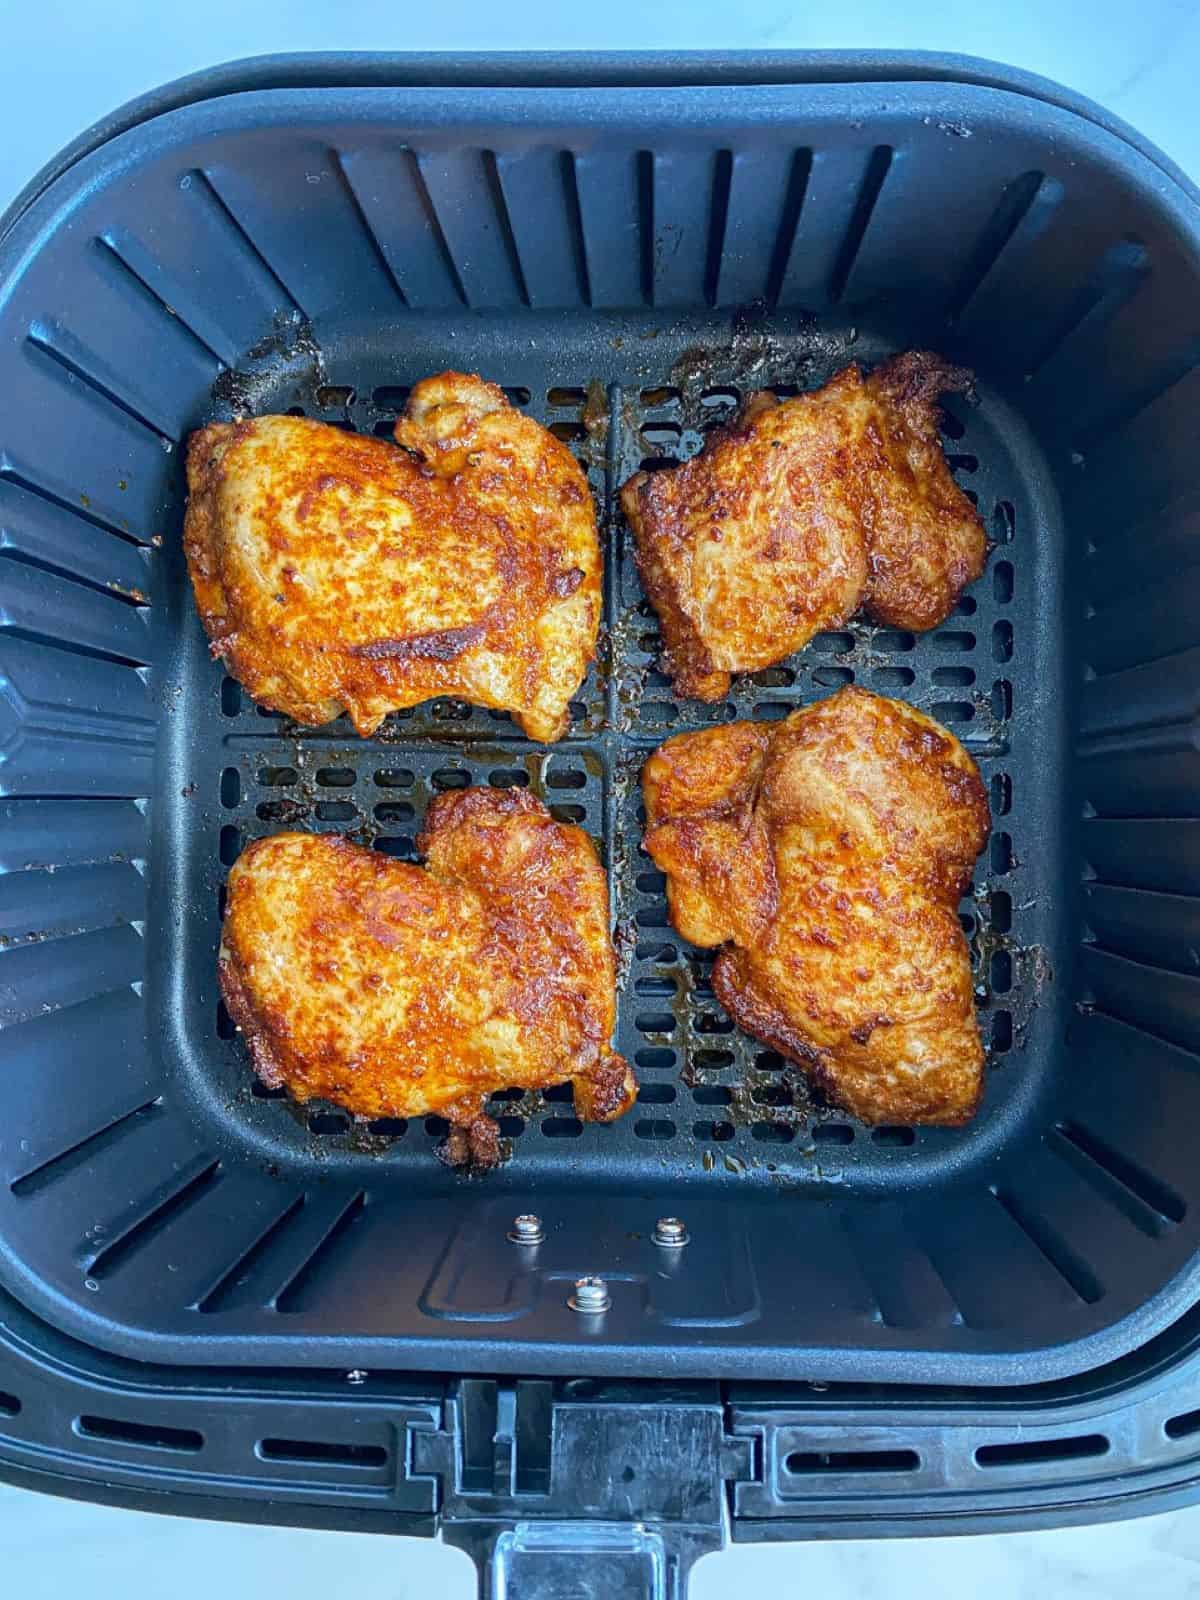 Cooked air fryer chicken thighs in an air fryer basket.